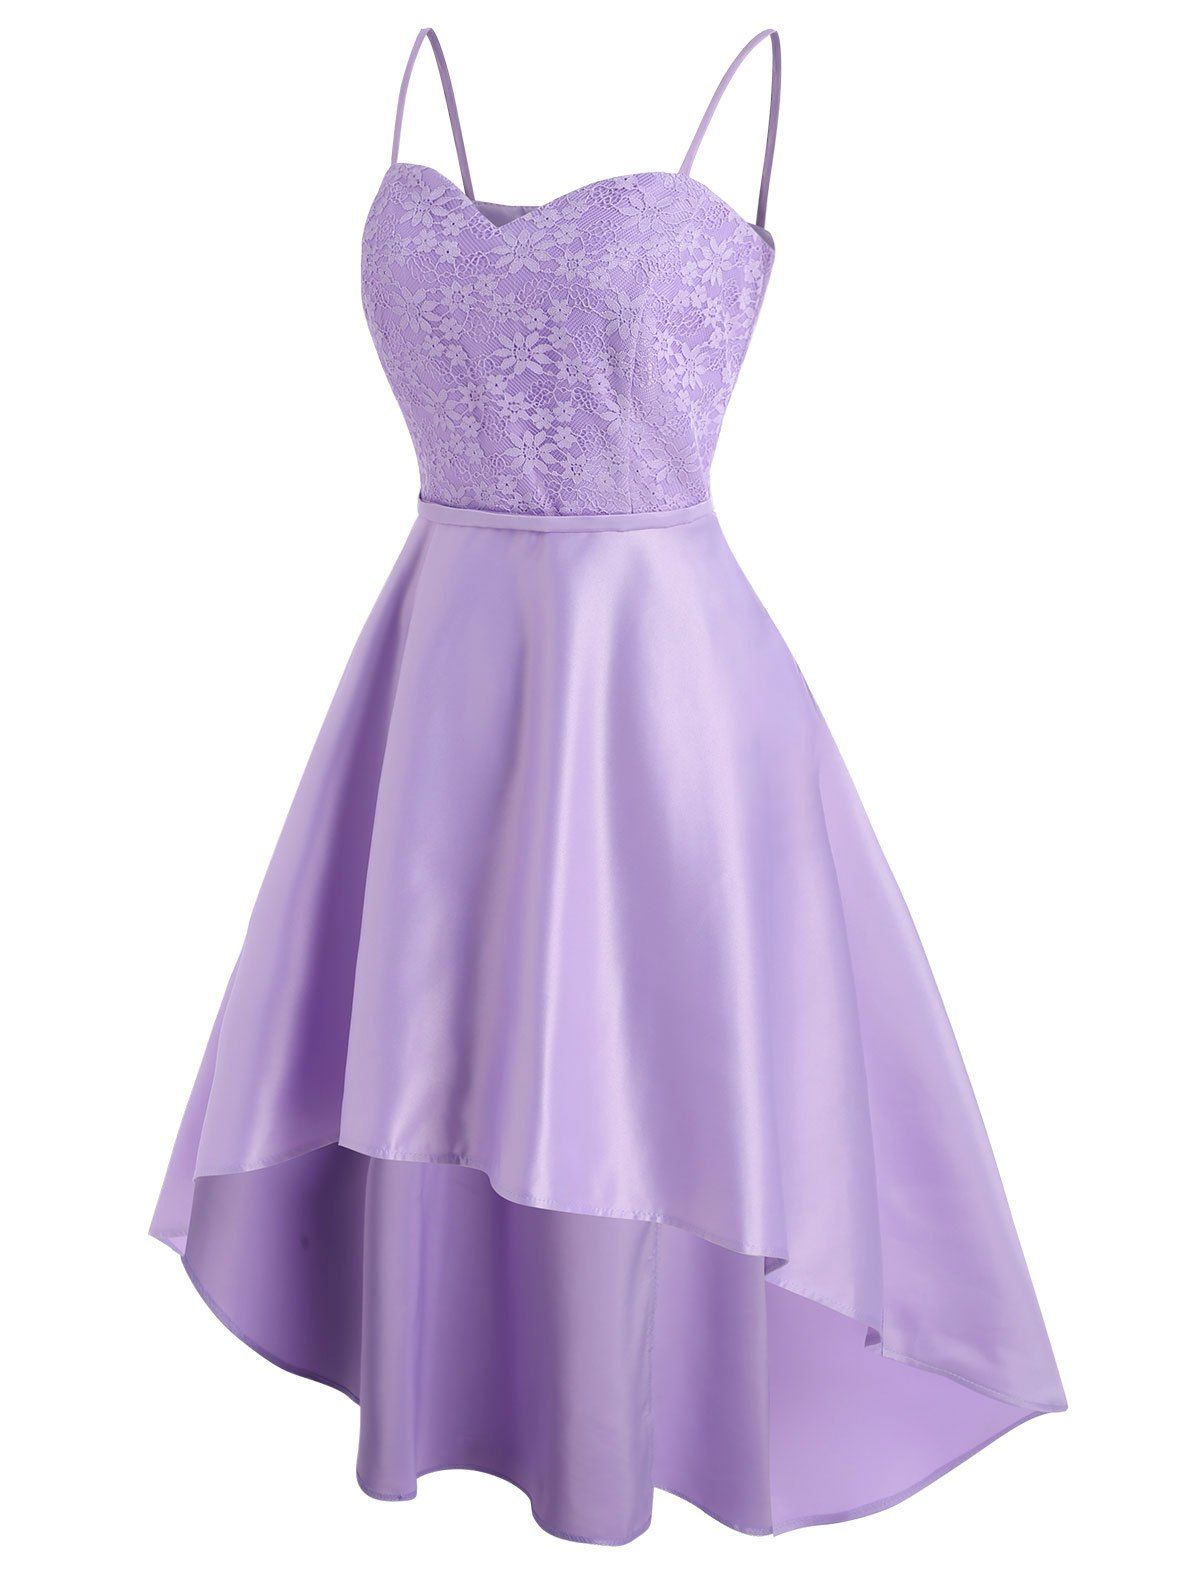 Elegant Flower Lace High Low Midi Party Dress - LIGHT PURPLE 2XL